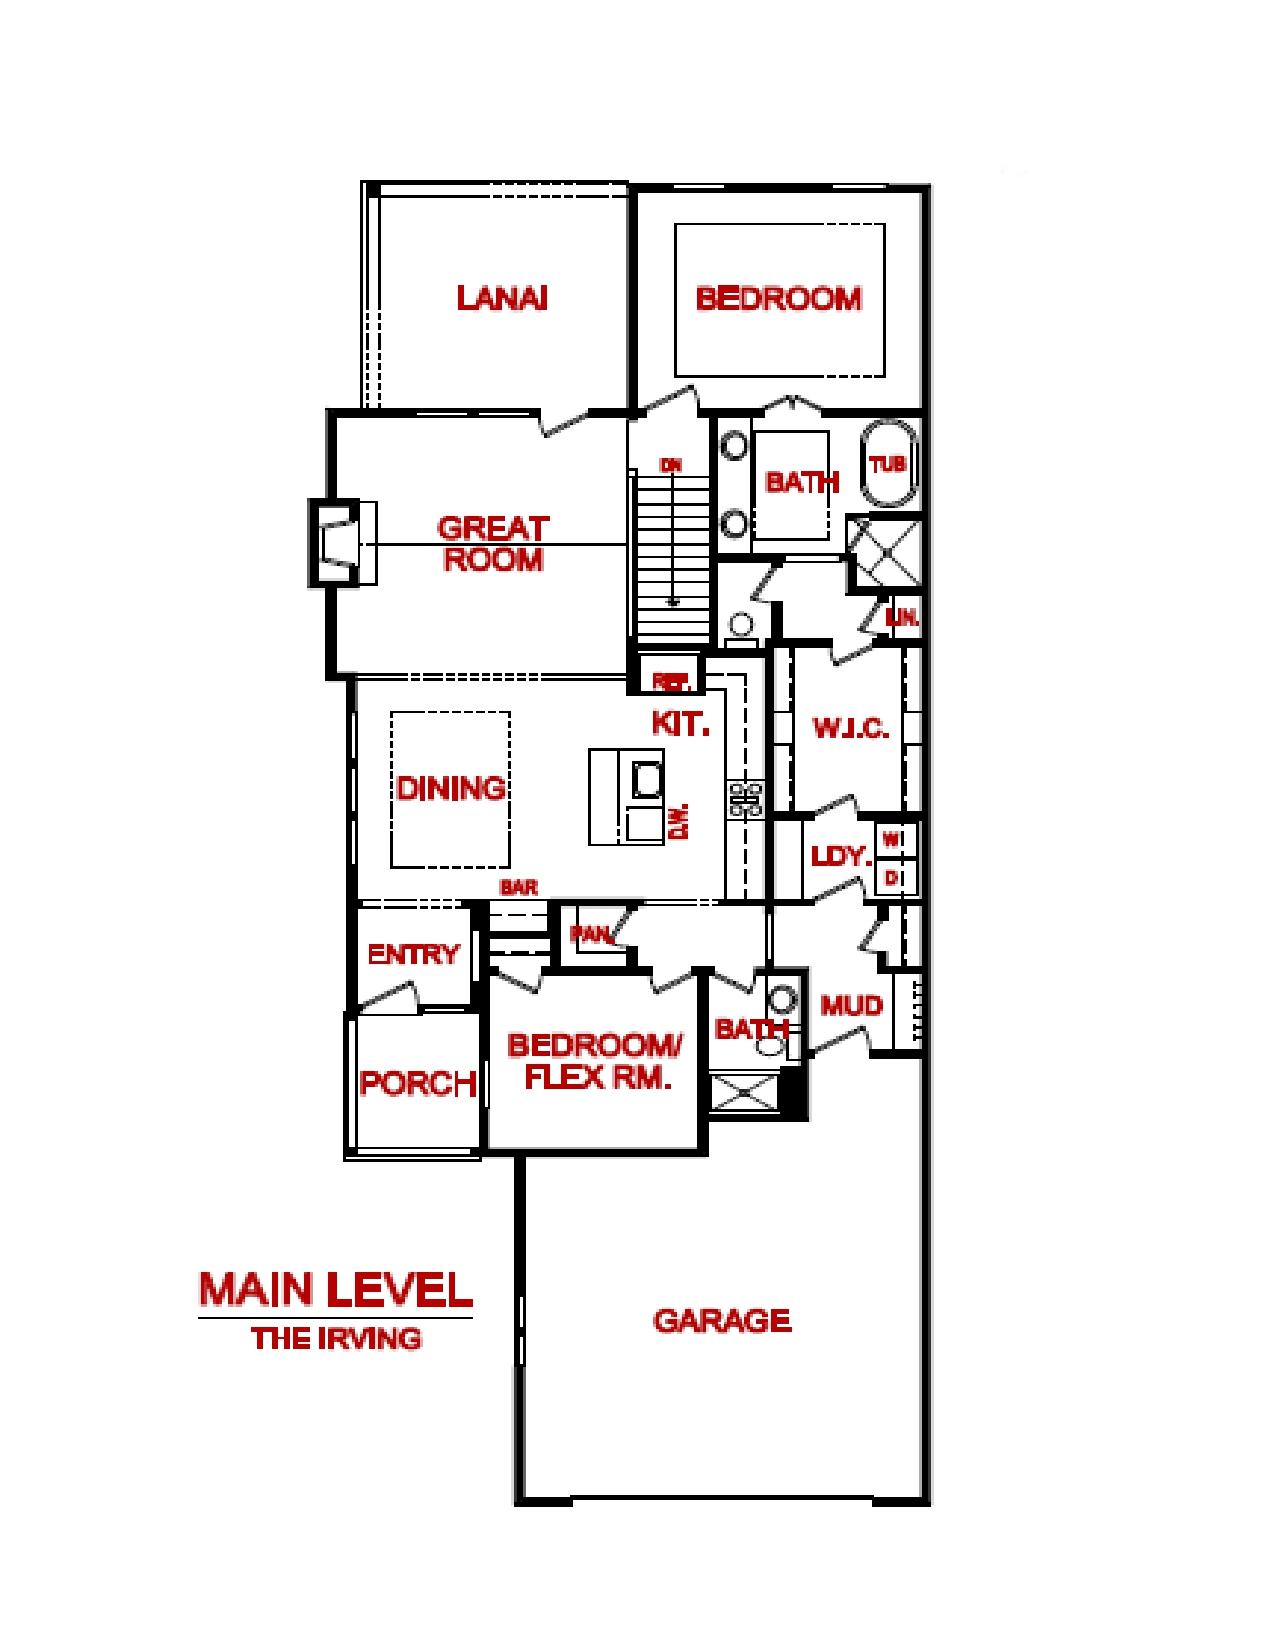 Main level floor plan of an irving model from Lambie custom homes